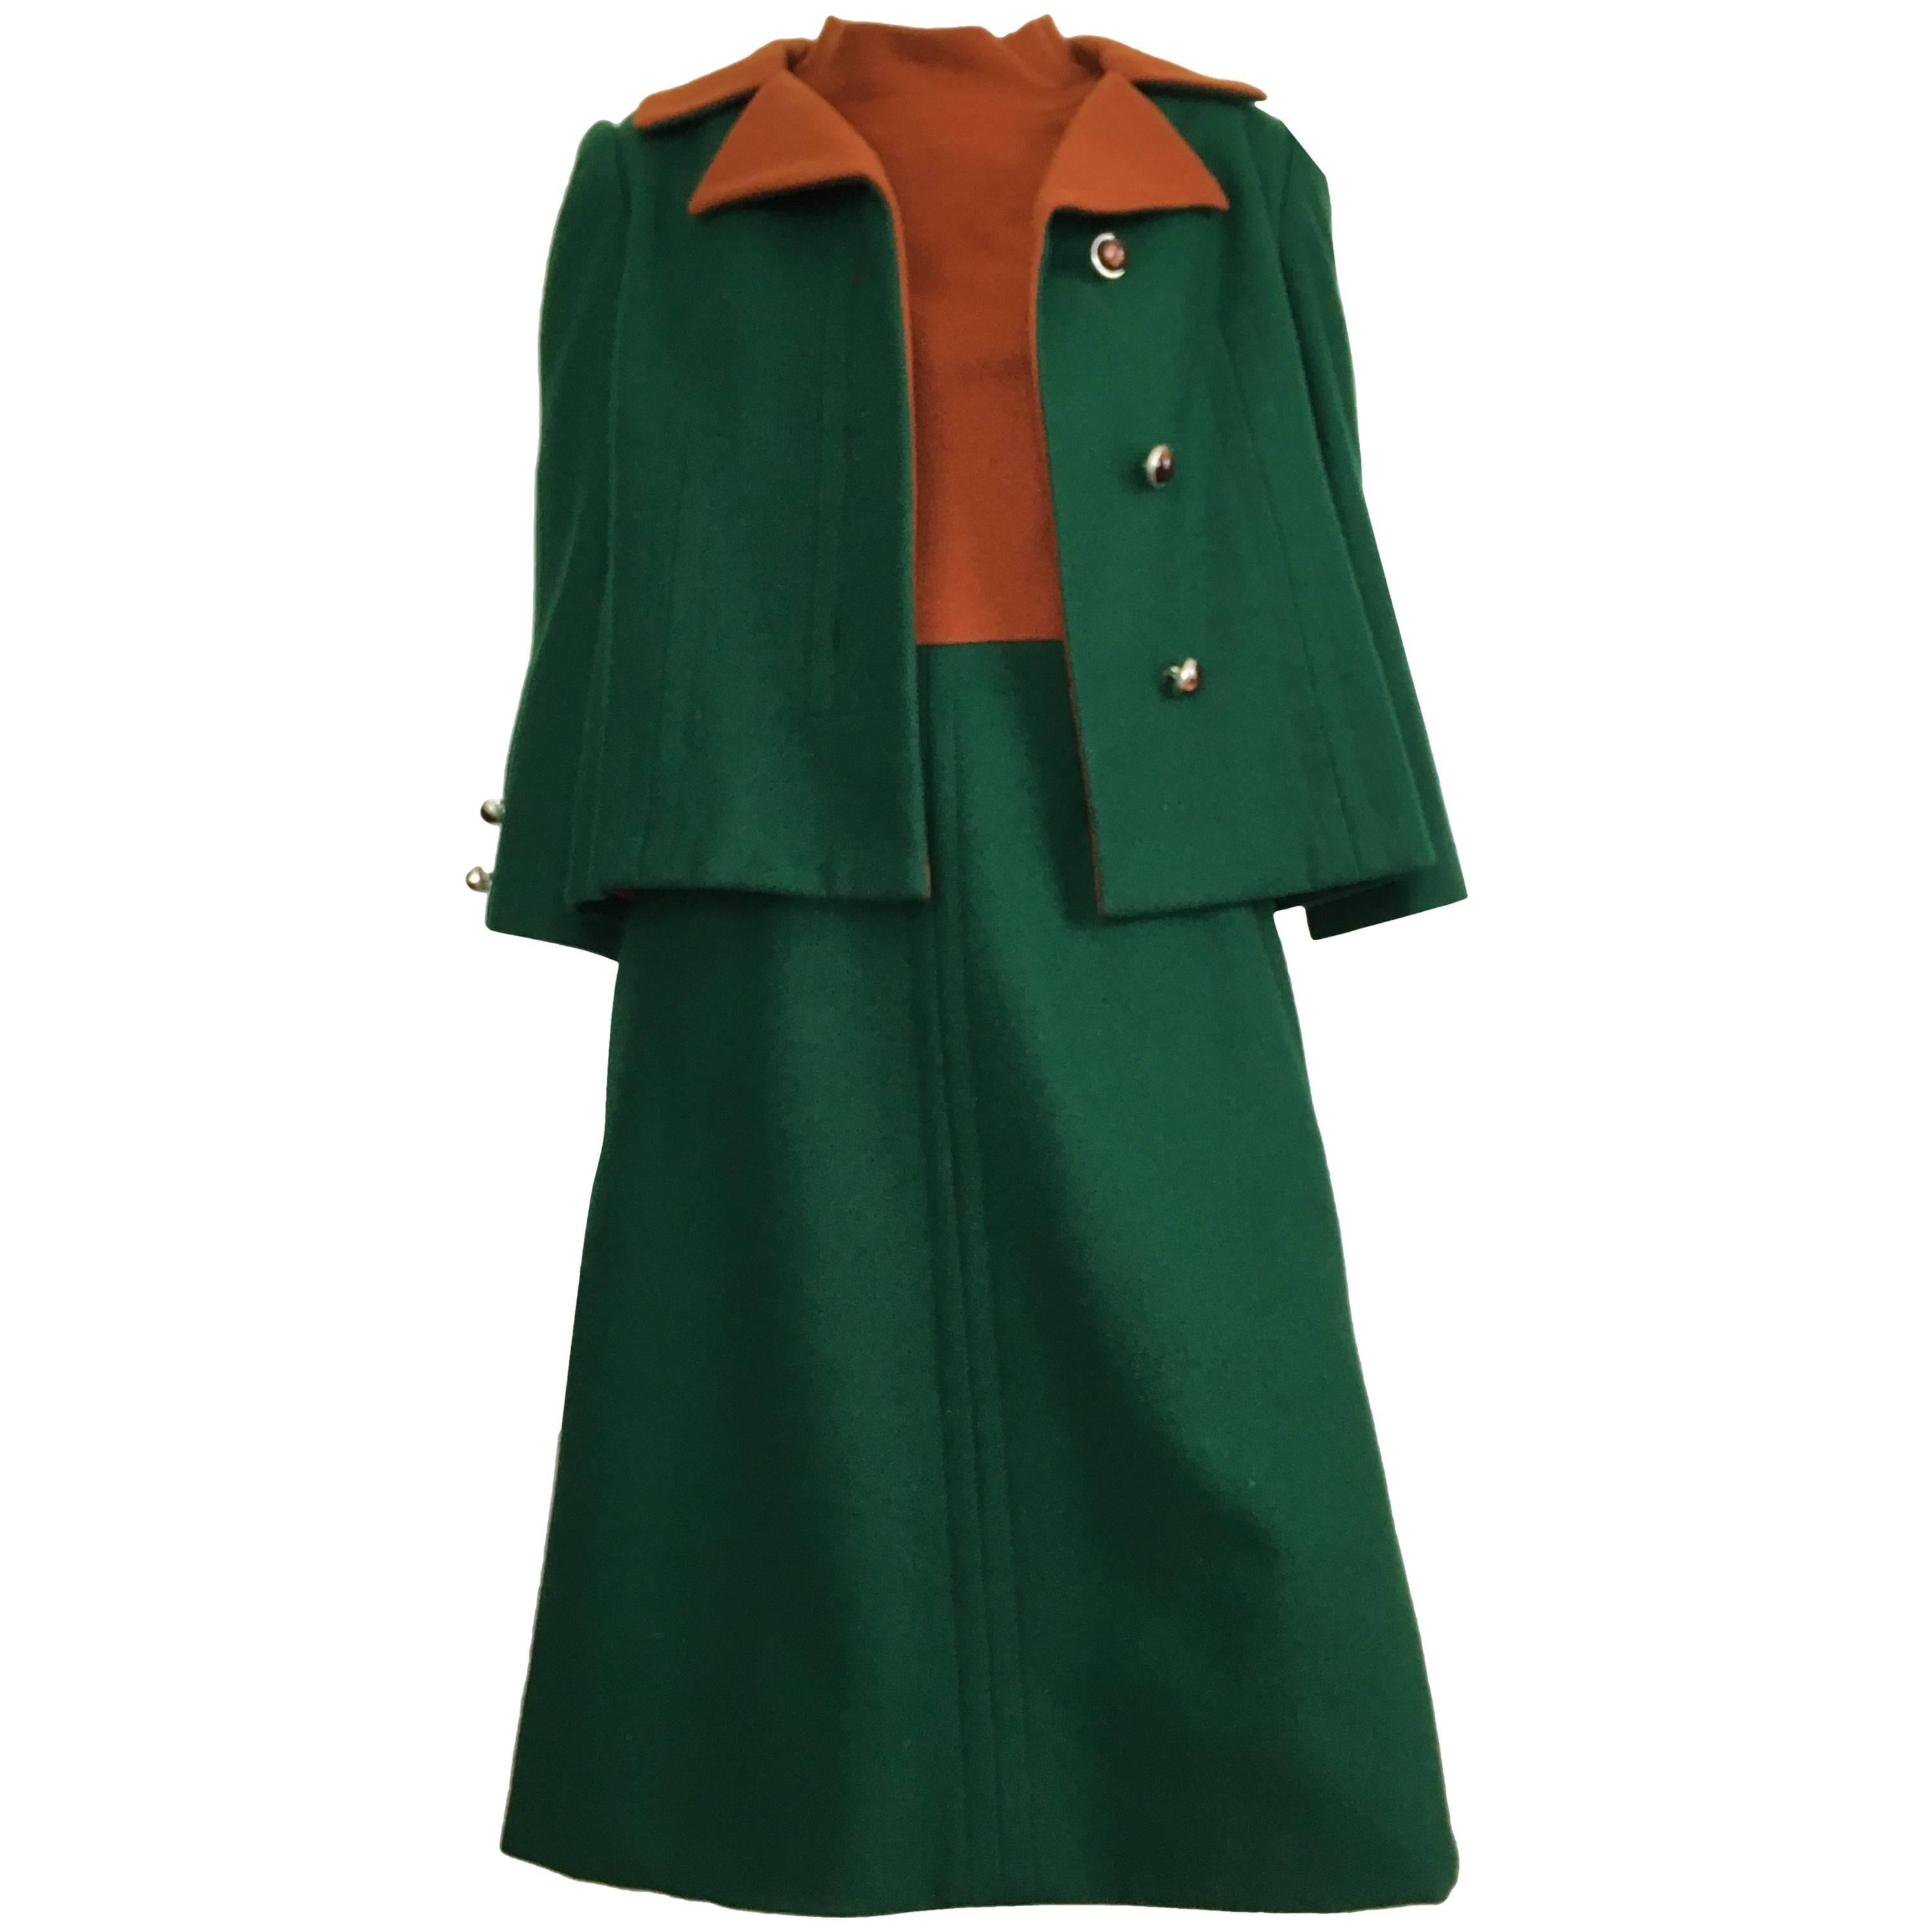 Pattullo-Jo Copeland Wool Jacket & Dress with Pockets Size 6/8. For Sale